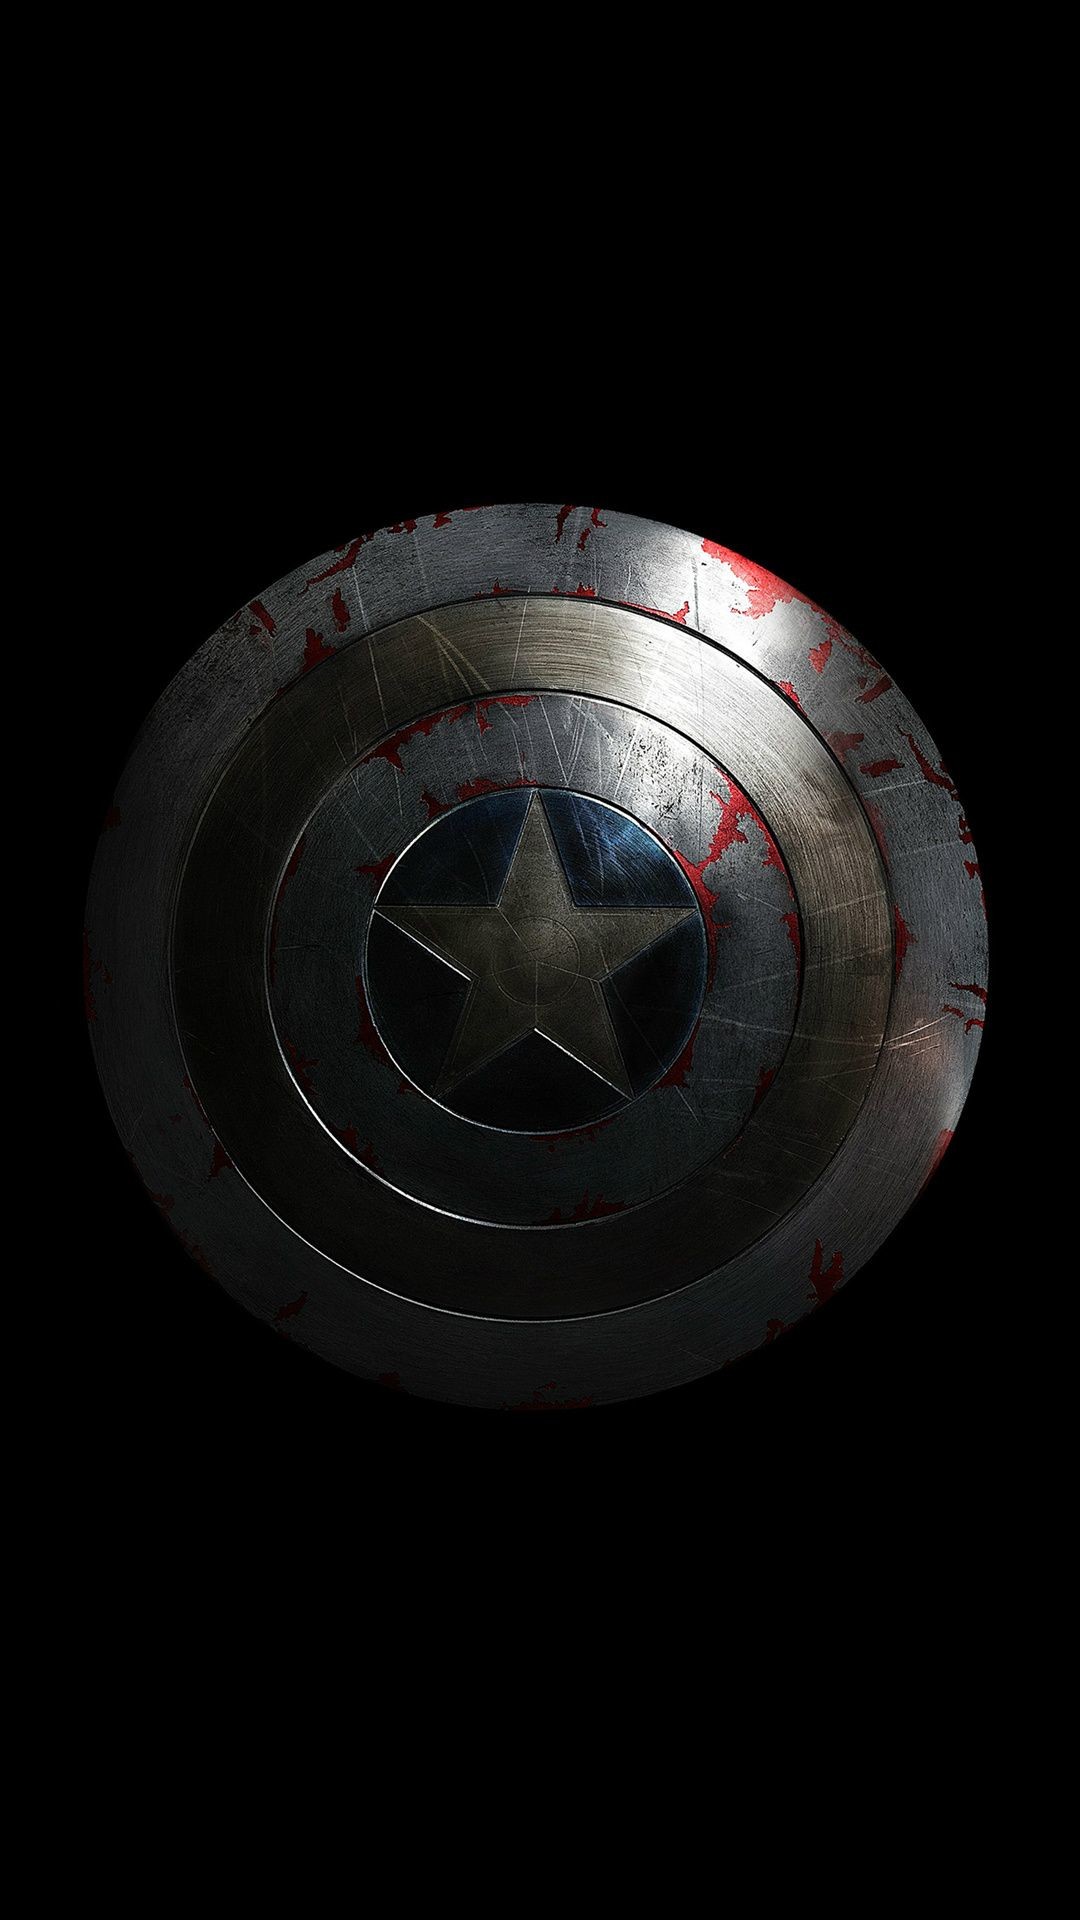 1080x1920 Captain America Avengers Hero Sheild Small Dark #iPhone #6 #plus #wallpaper